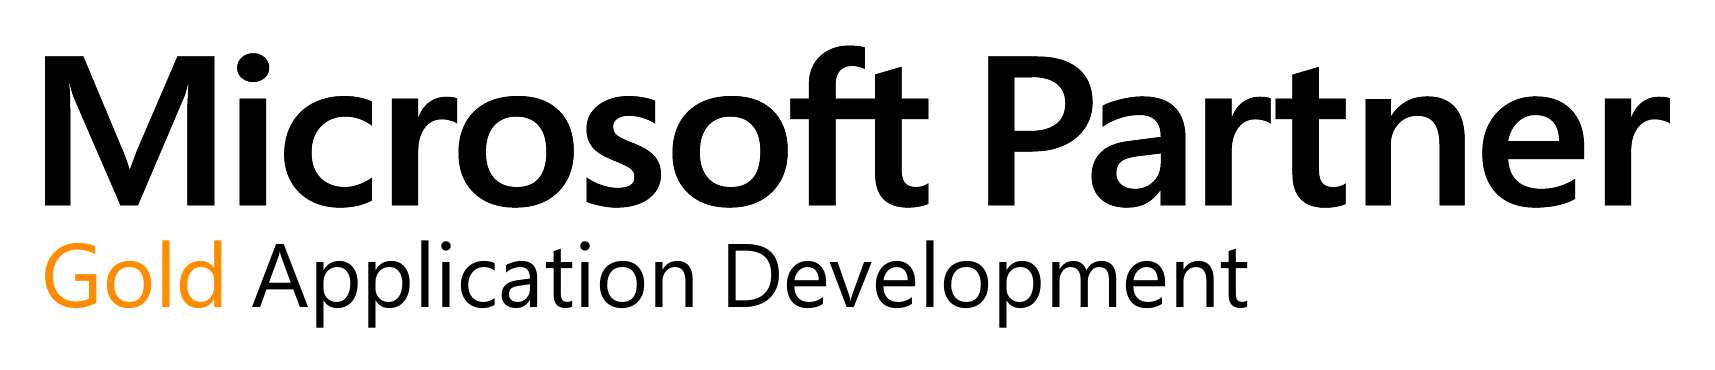 Microsoft Partner - Gold Application Development